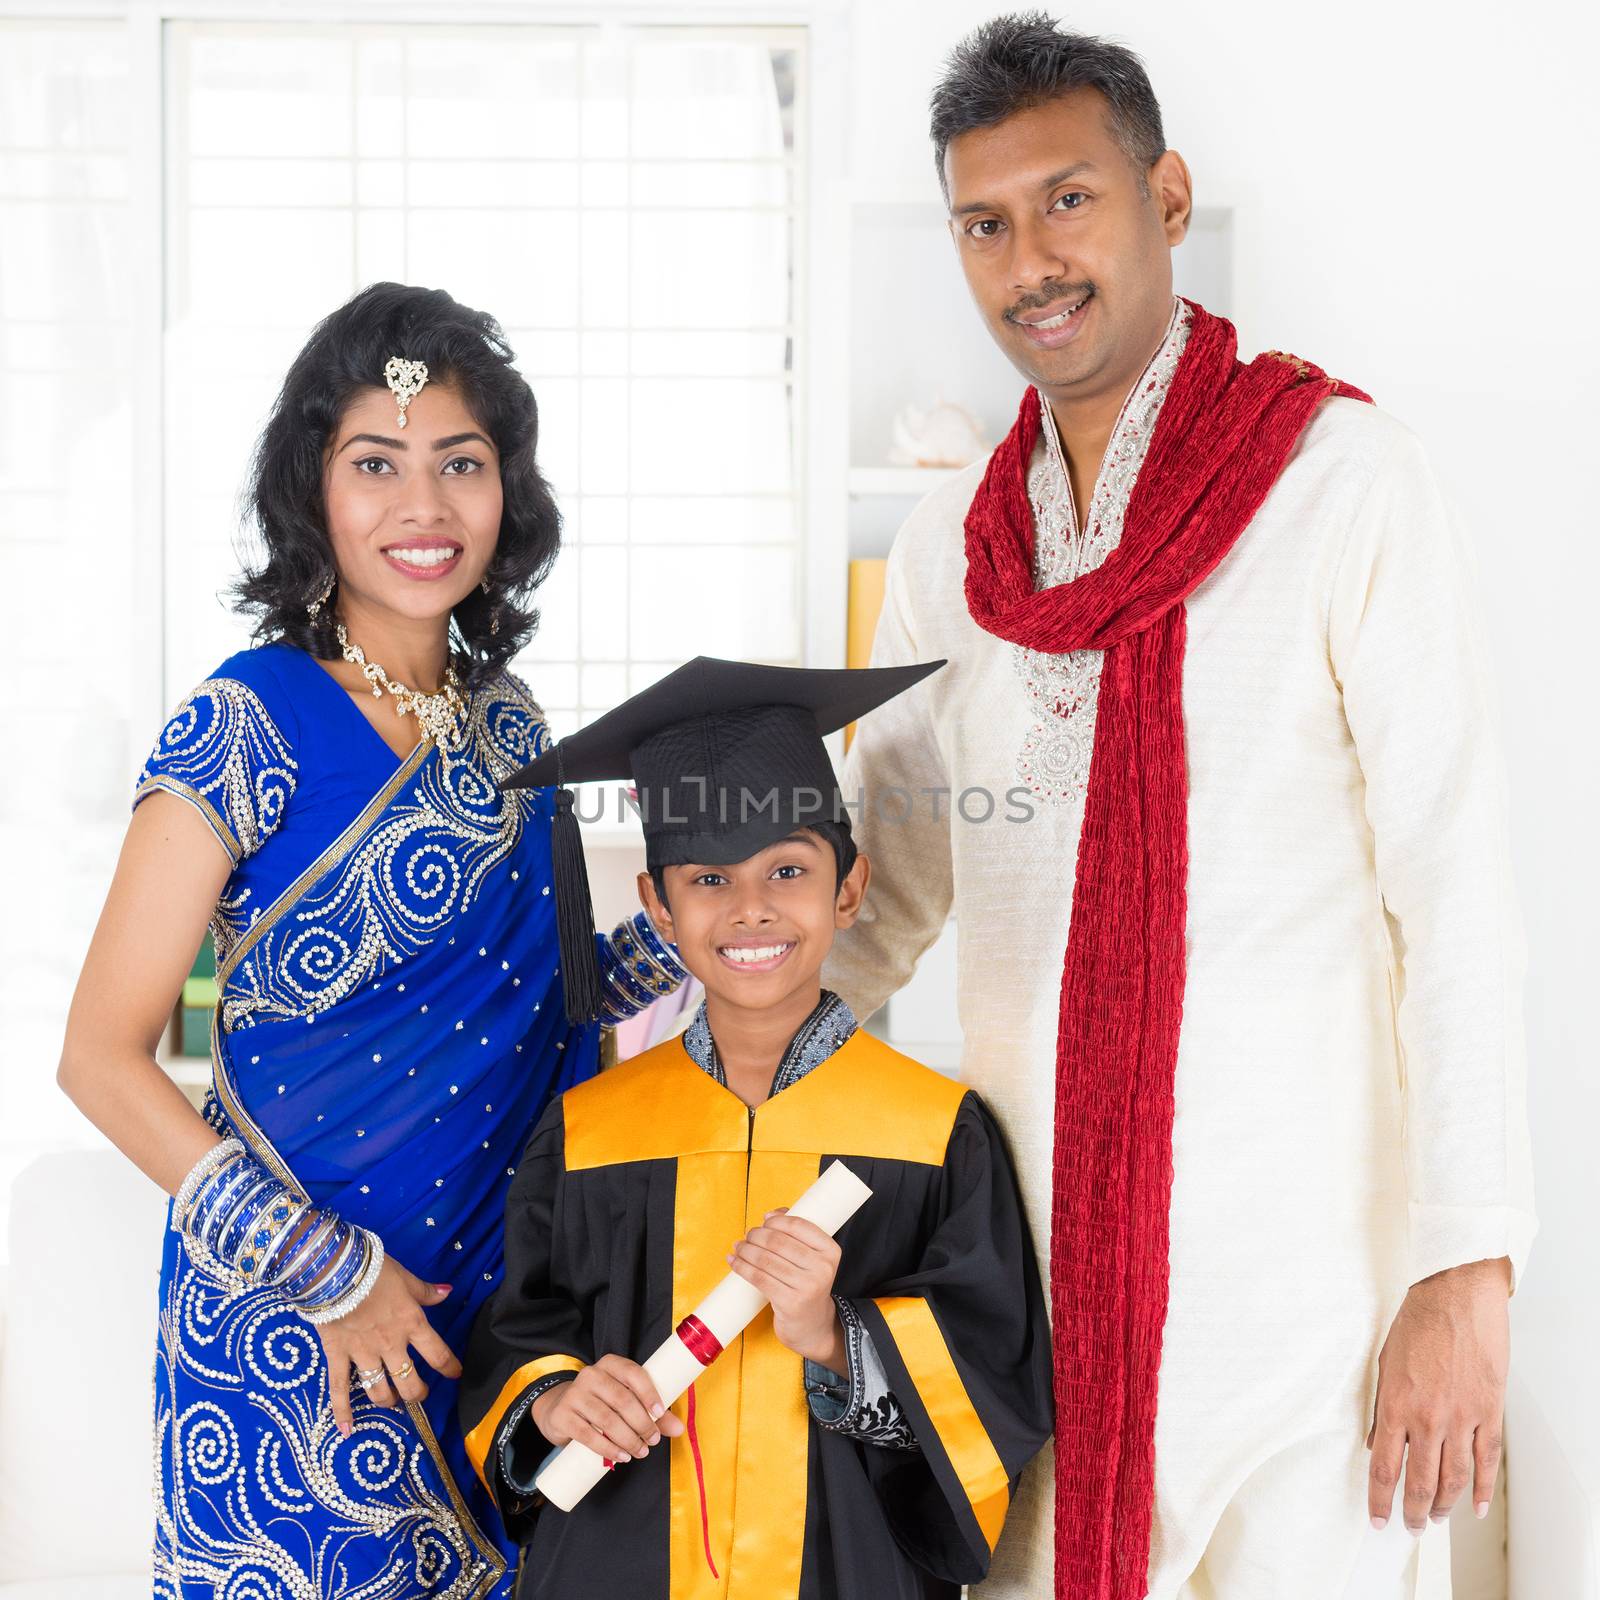 Kindergarten graduation. Asian Indian family, parents and child on kinder graduate day.